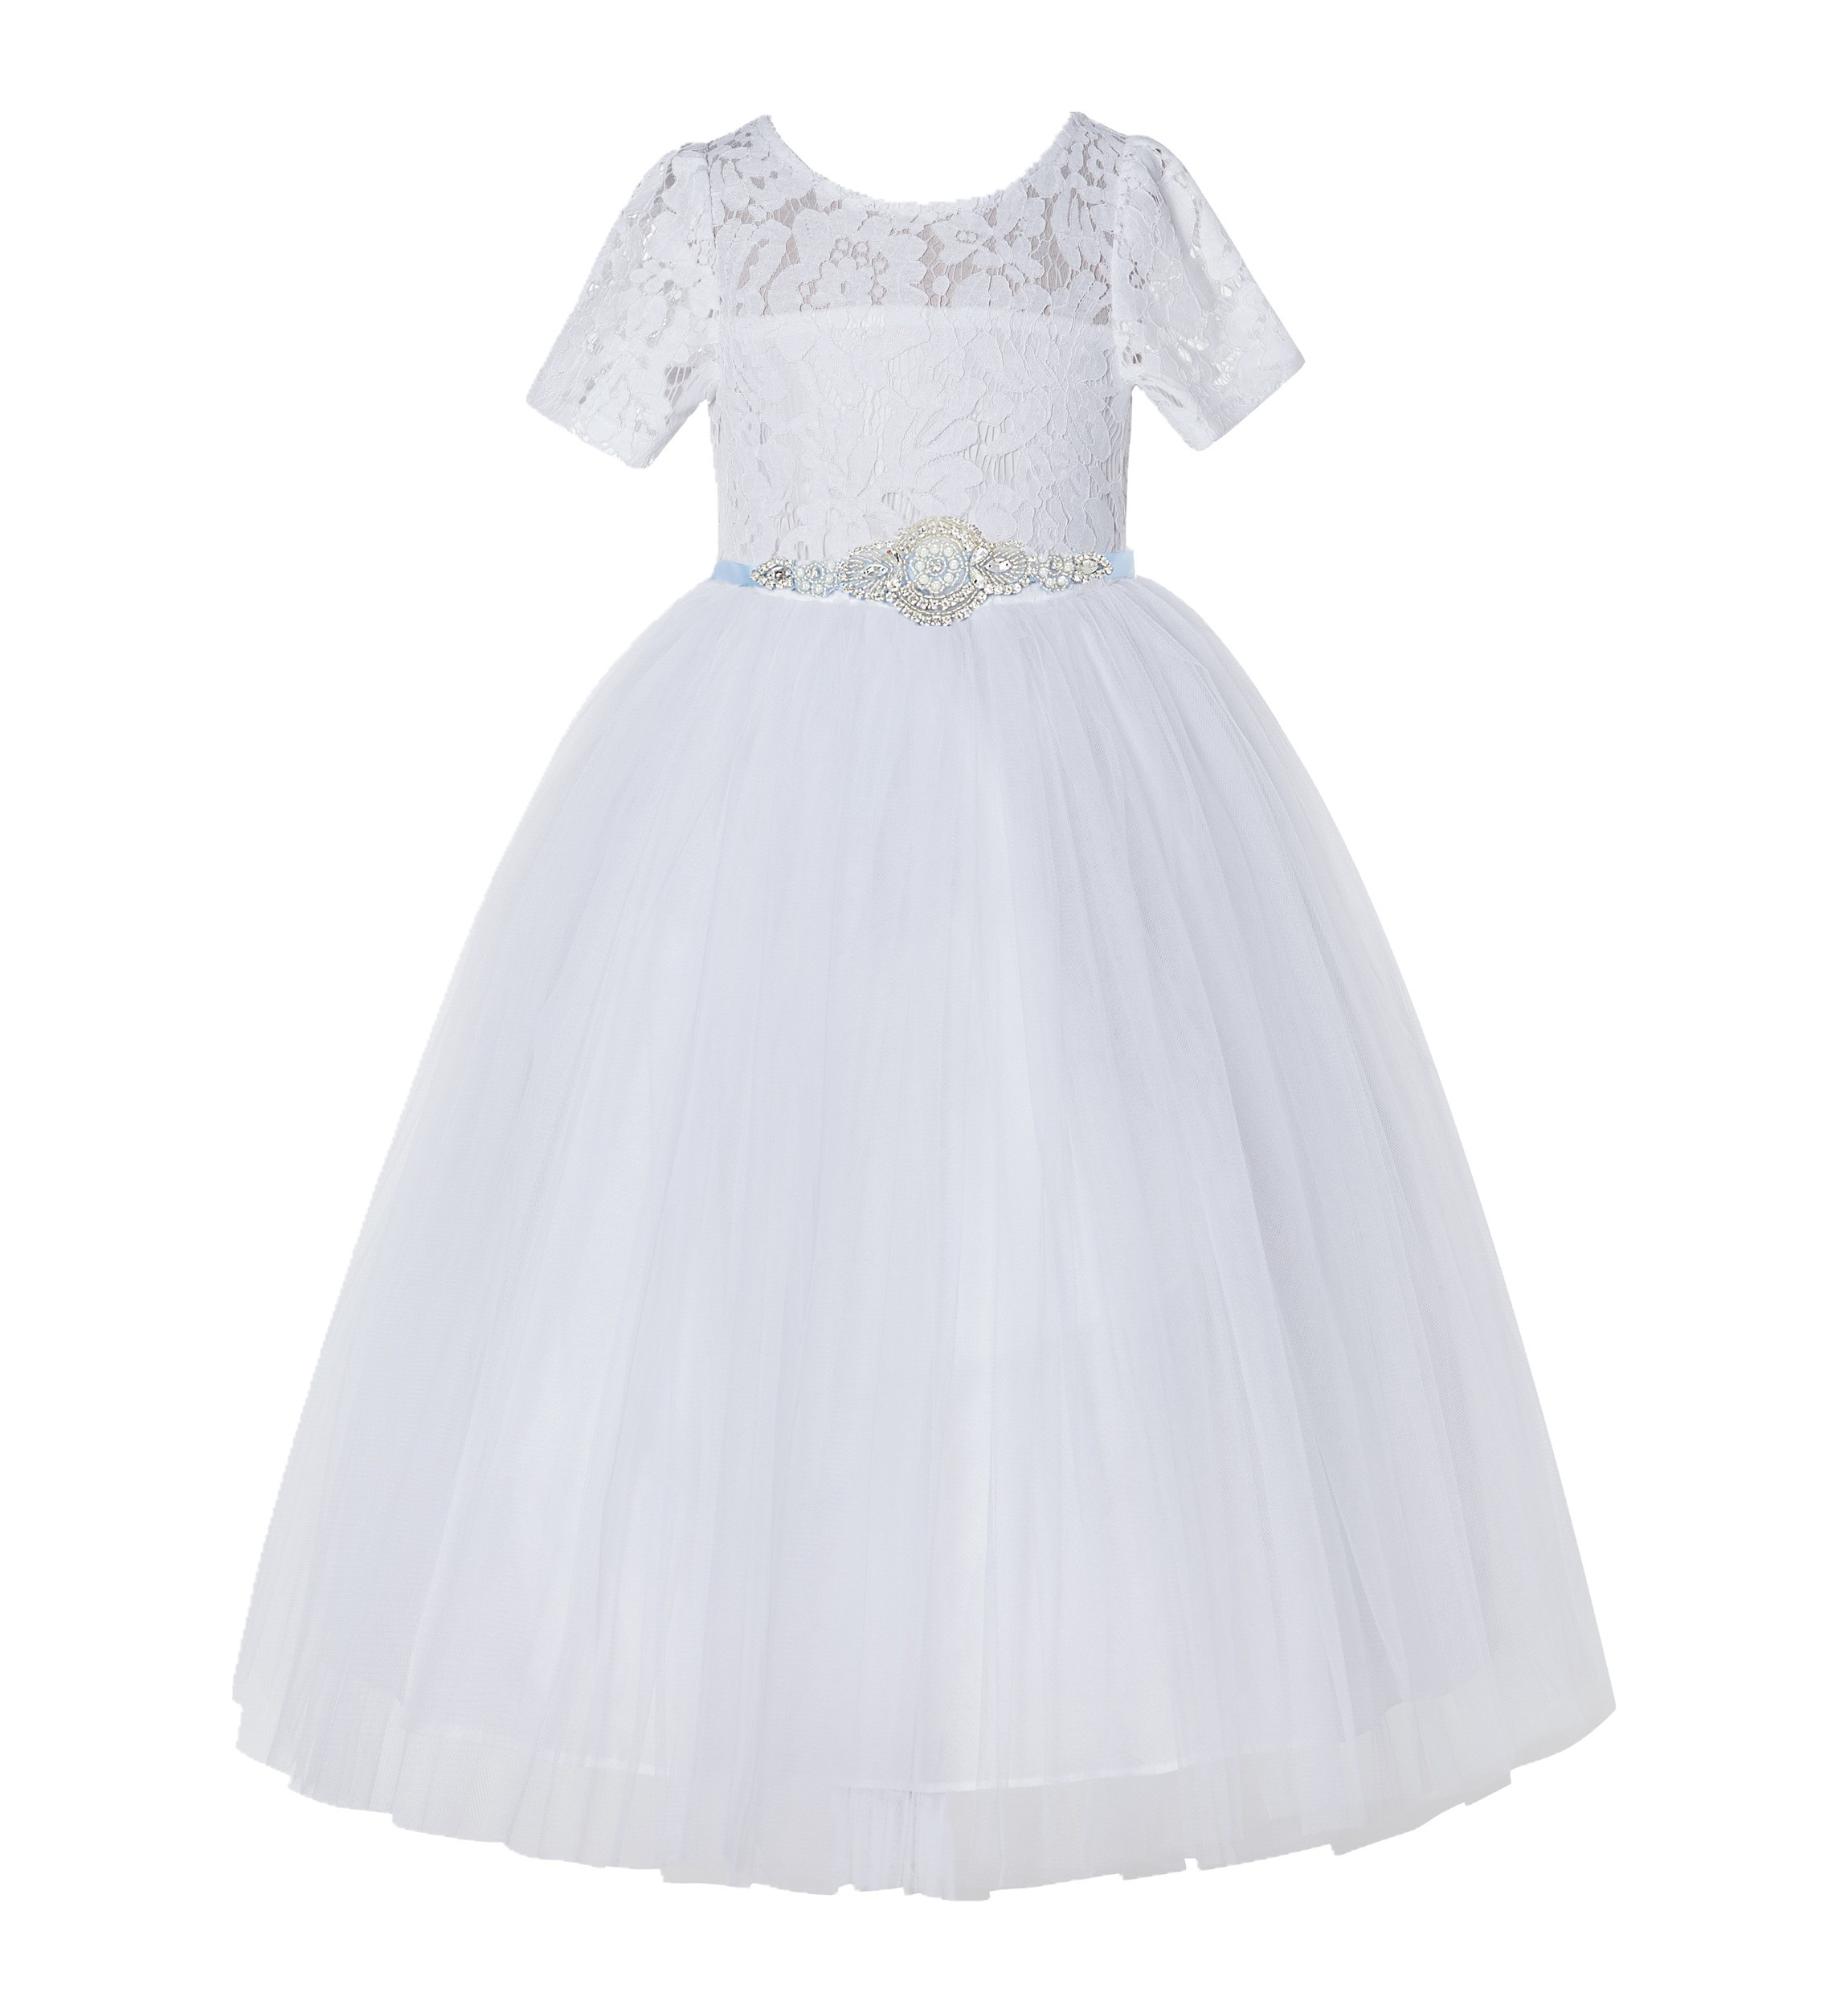 White / Dusty Blue Floral Lace Flower Girl Dress Vintage Dress LG2